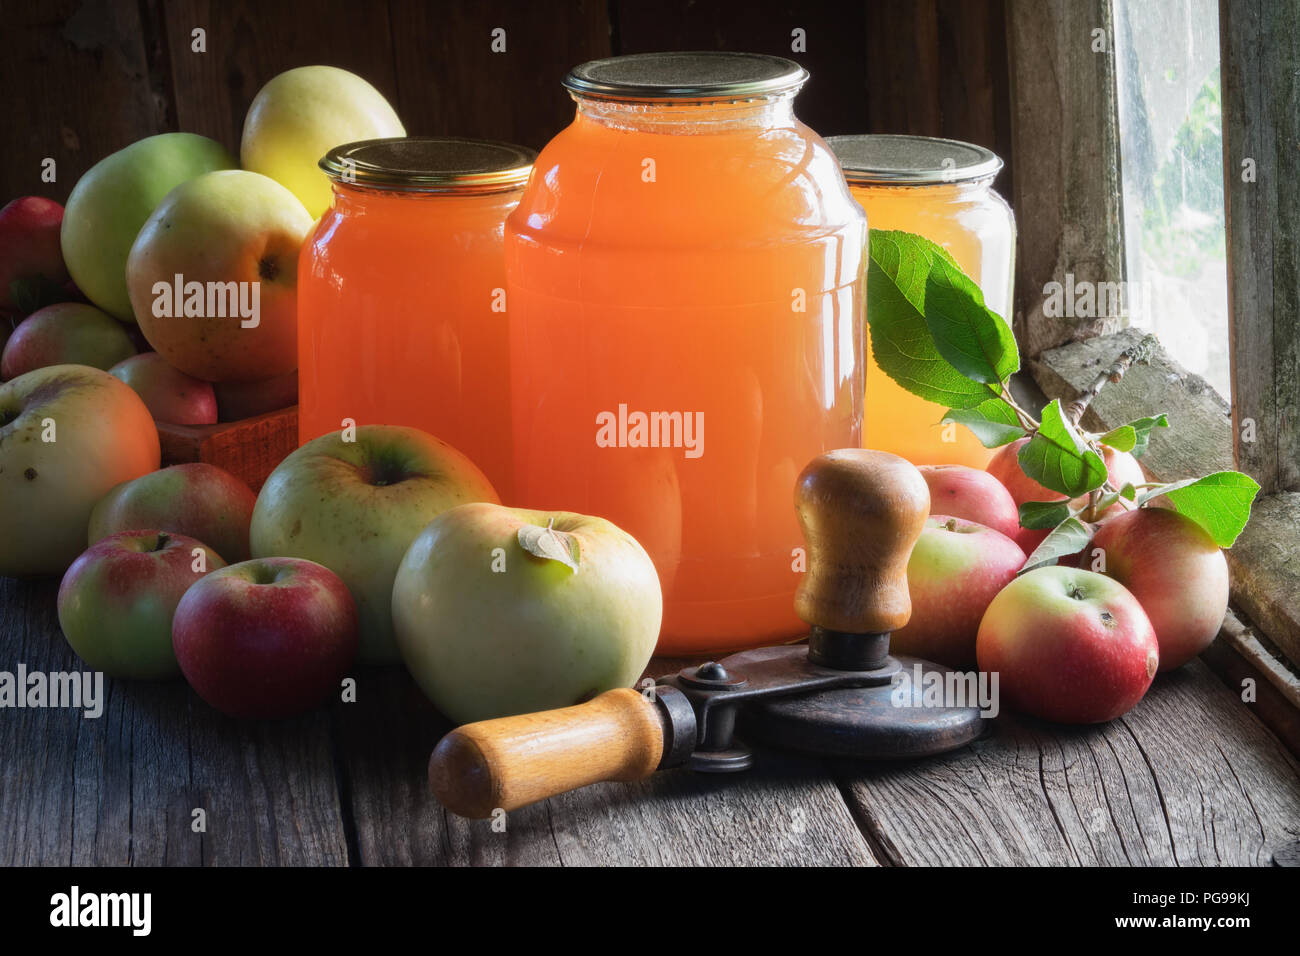 https://c8.alamy.com/comp/PG99KJ/glass-jars-of-apple-juice-apple-fruits-and-can-lid-closing-machine-for-canning-PG99KJ.jpg